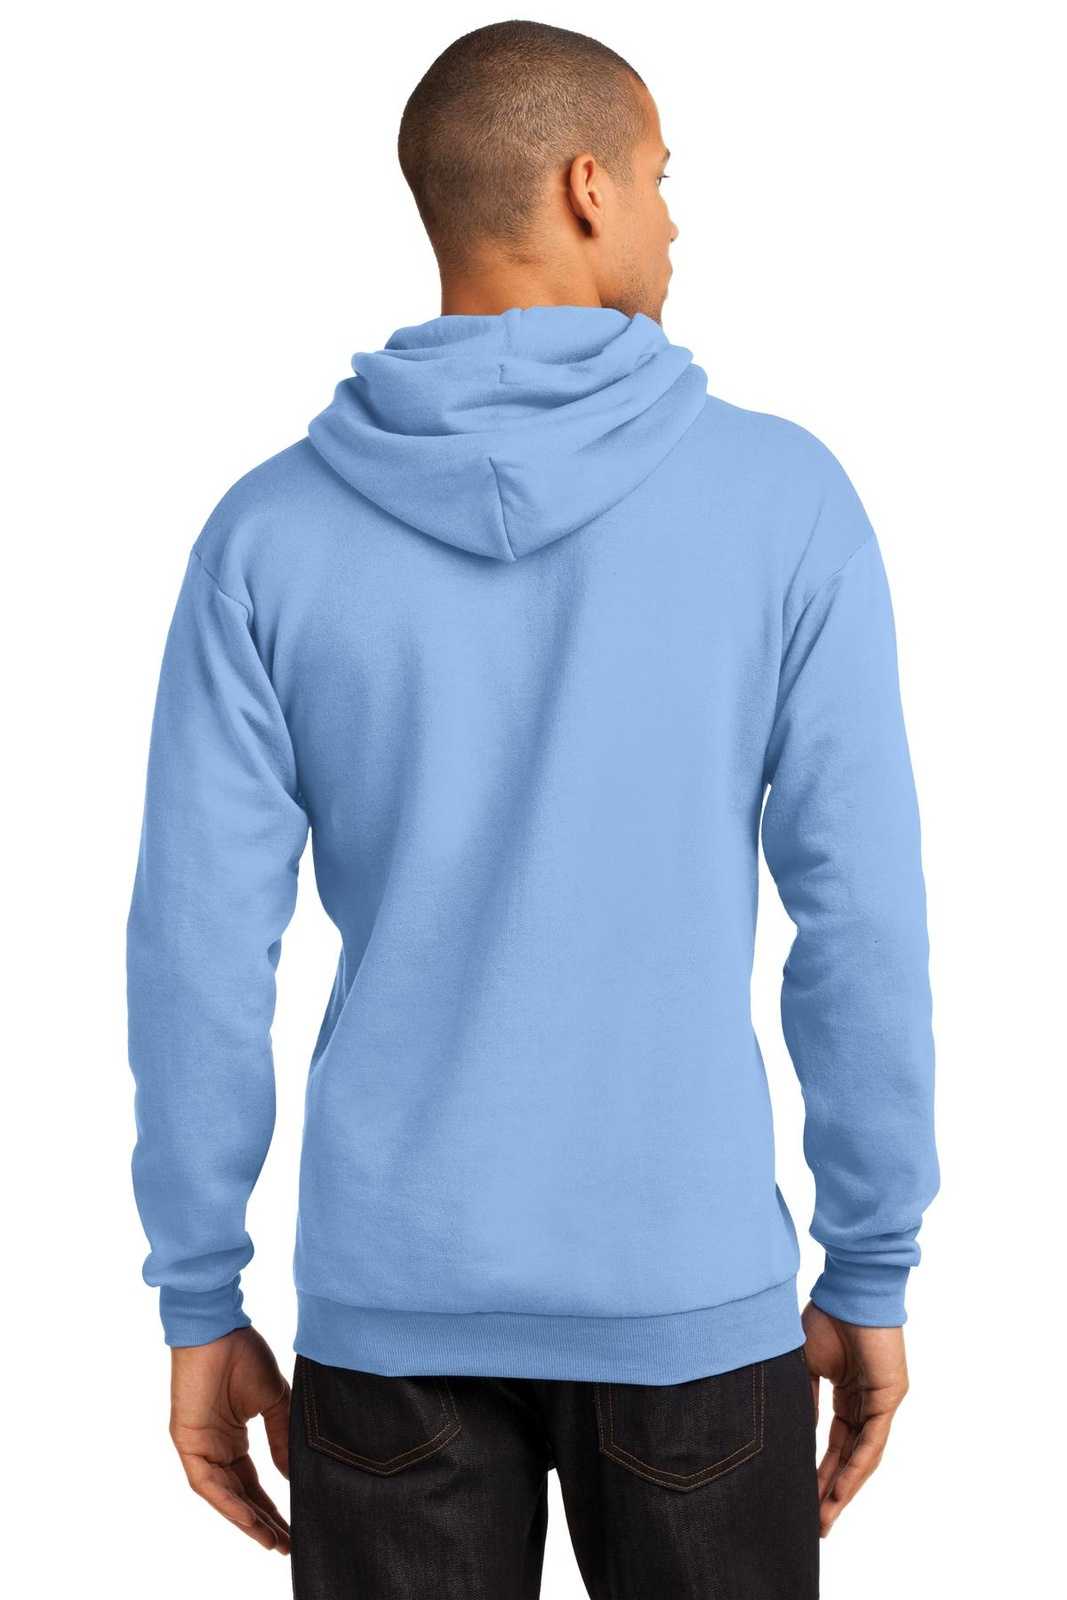 Port & Company PC78H Core Fleece Pullover Hooded Sweatshirt - Light Blue - HIT a Double - 1